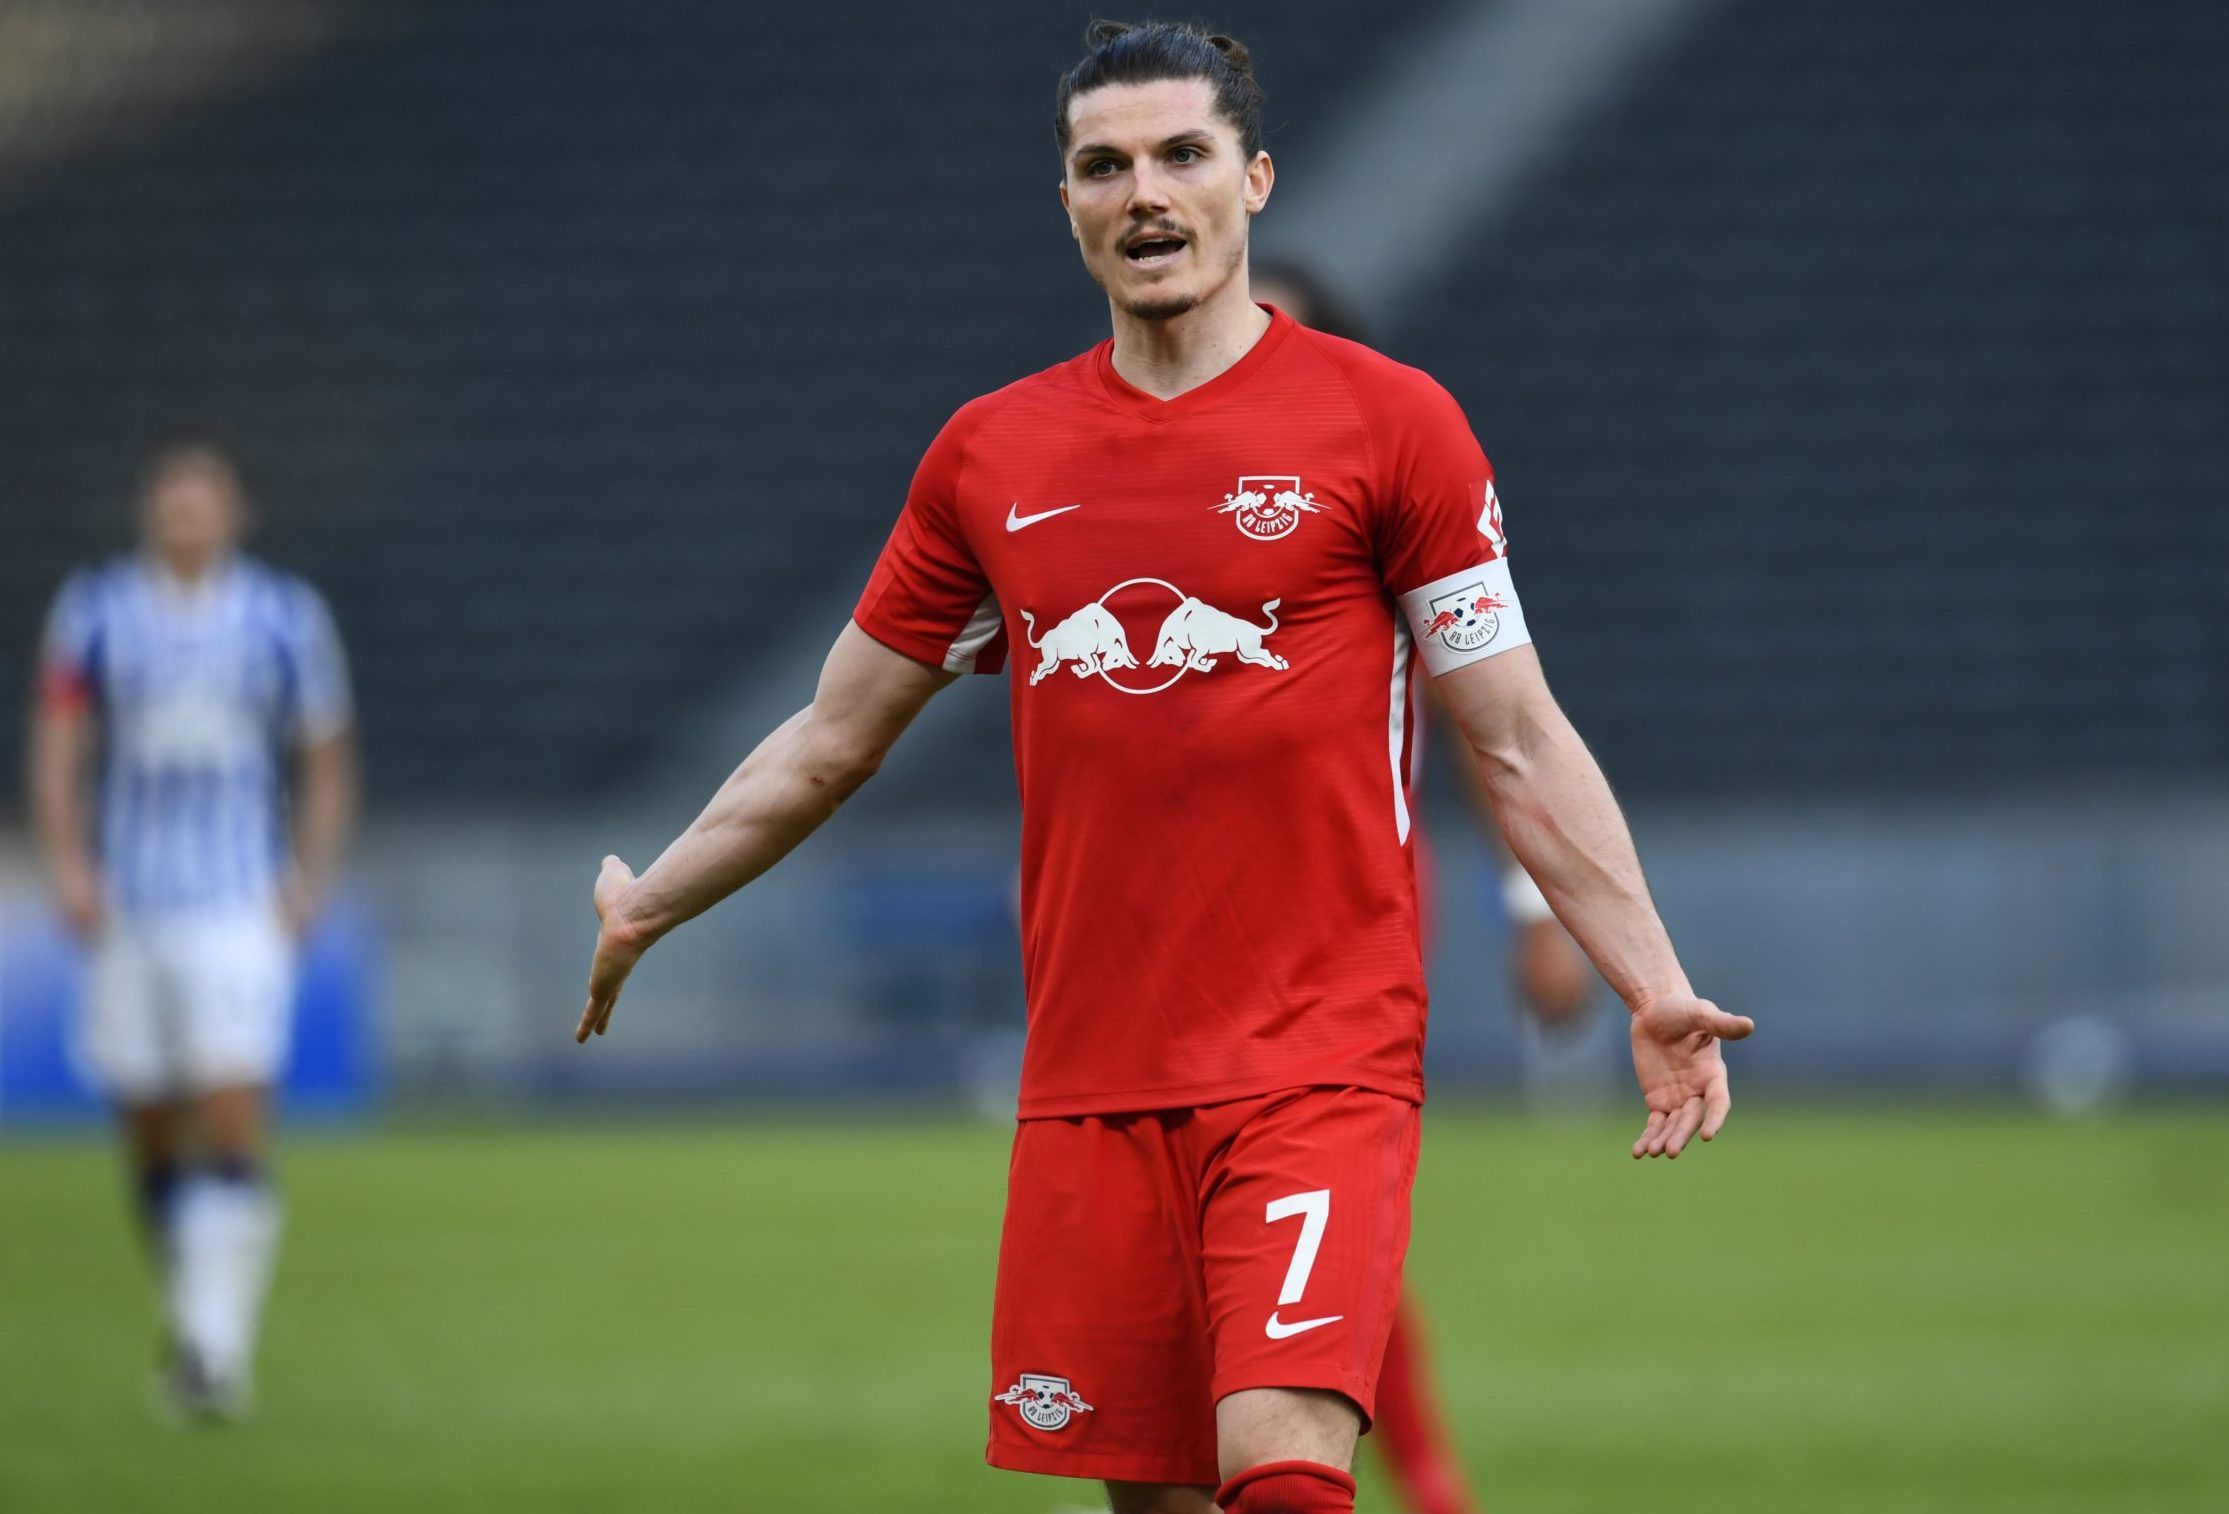 rb leipzig midfielder and captain marcel sabitzer reacts vs hertha bundesliga spurs transfer target